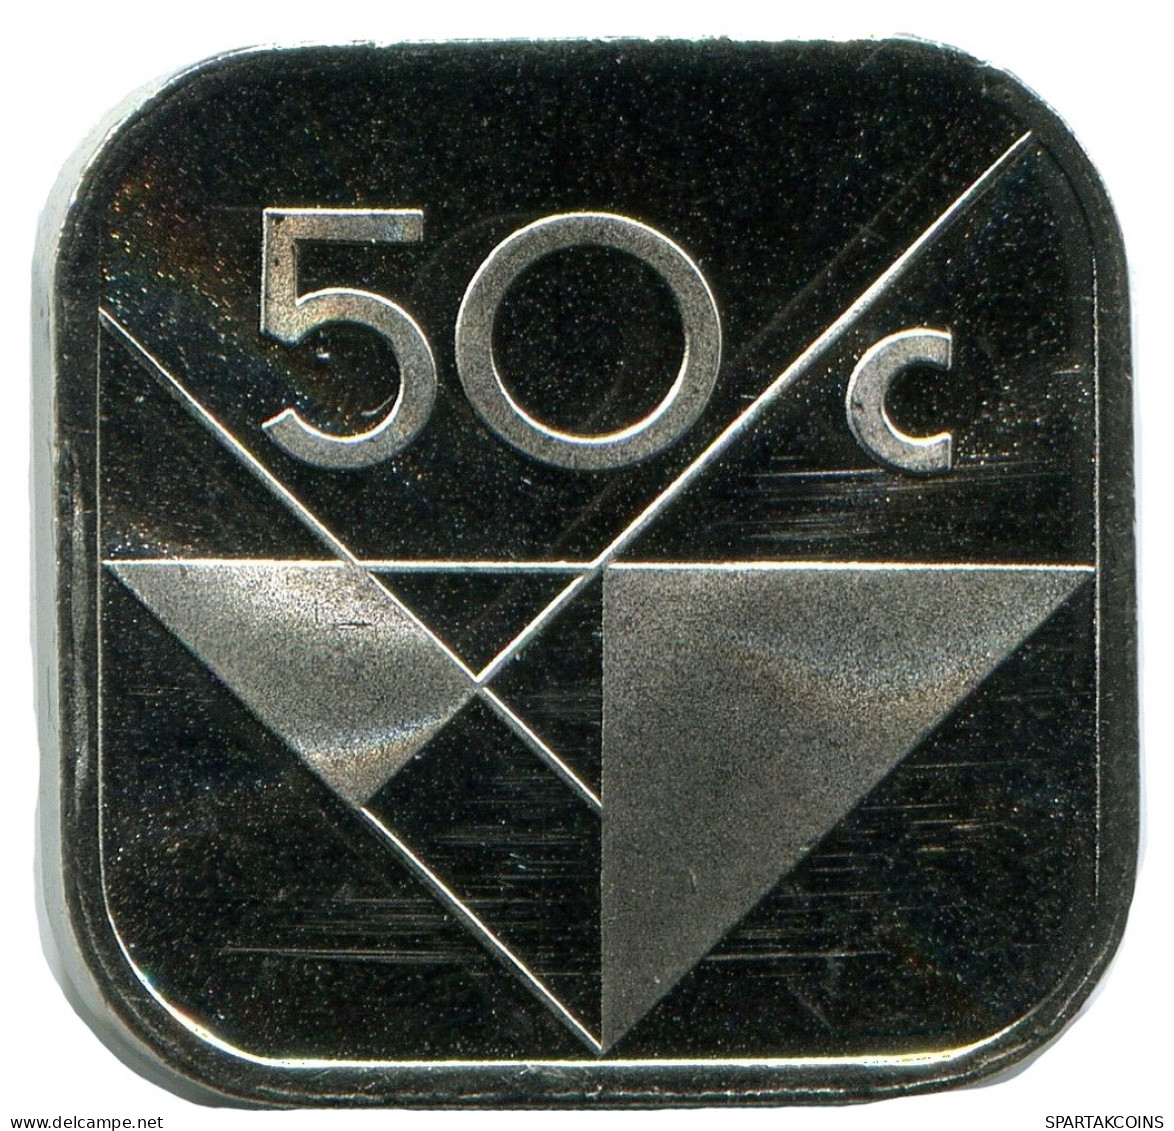 50 CENTS 1986 ARUBA Coin (From BU Mint Set) #AH053.U - Aruba